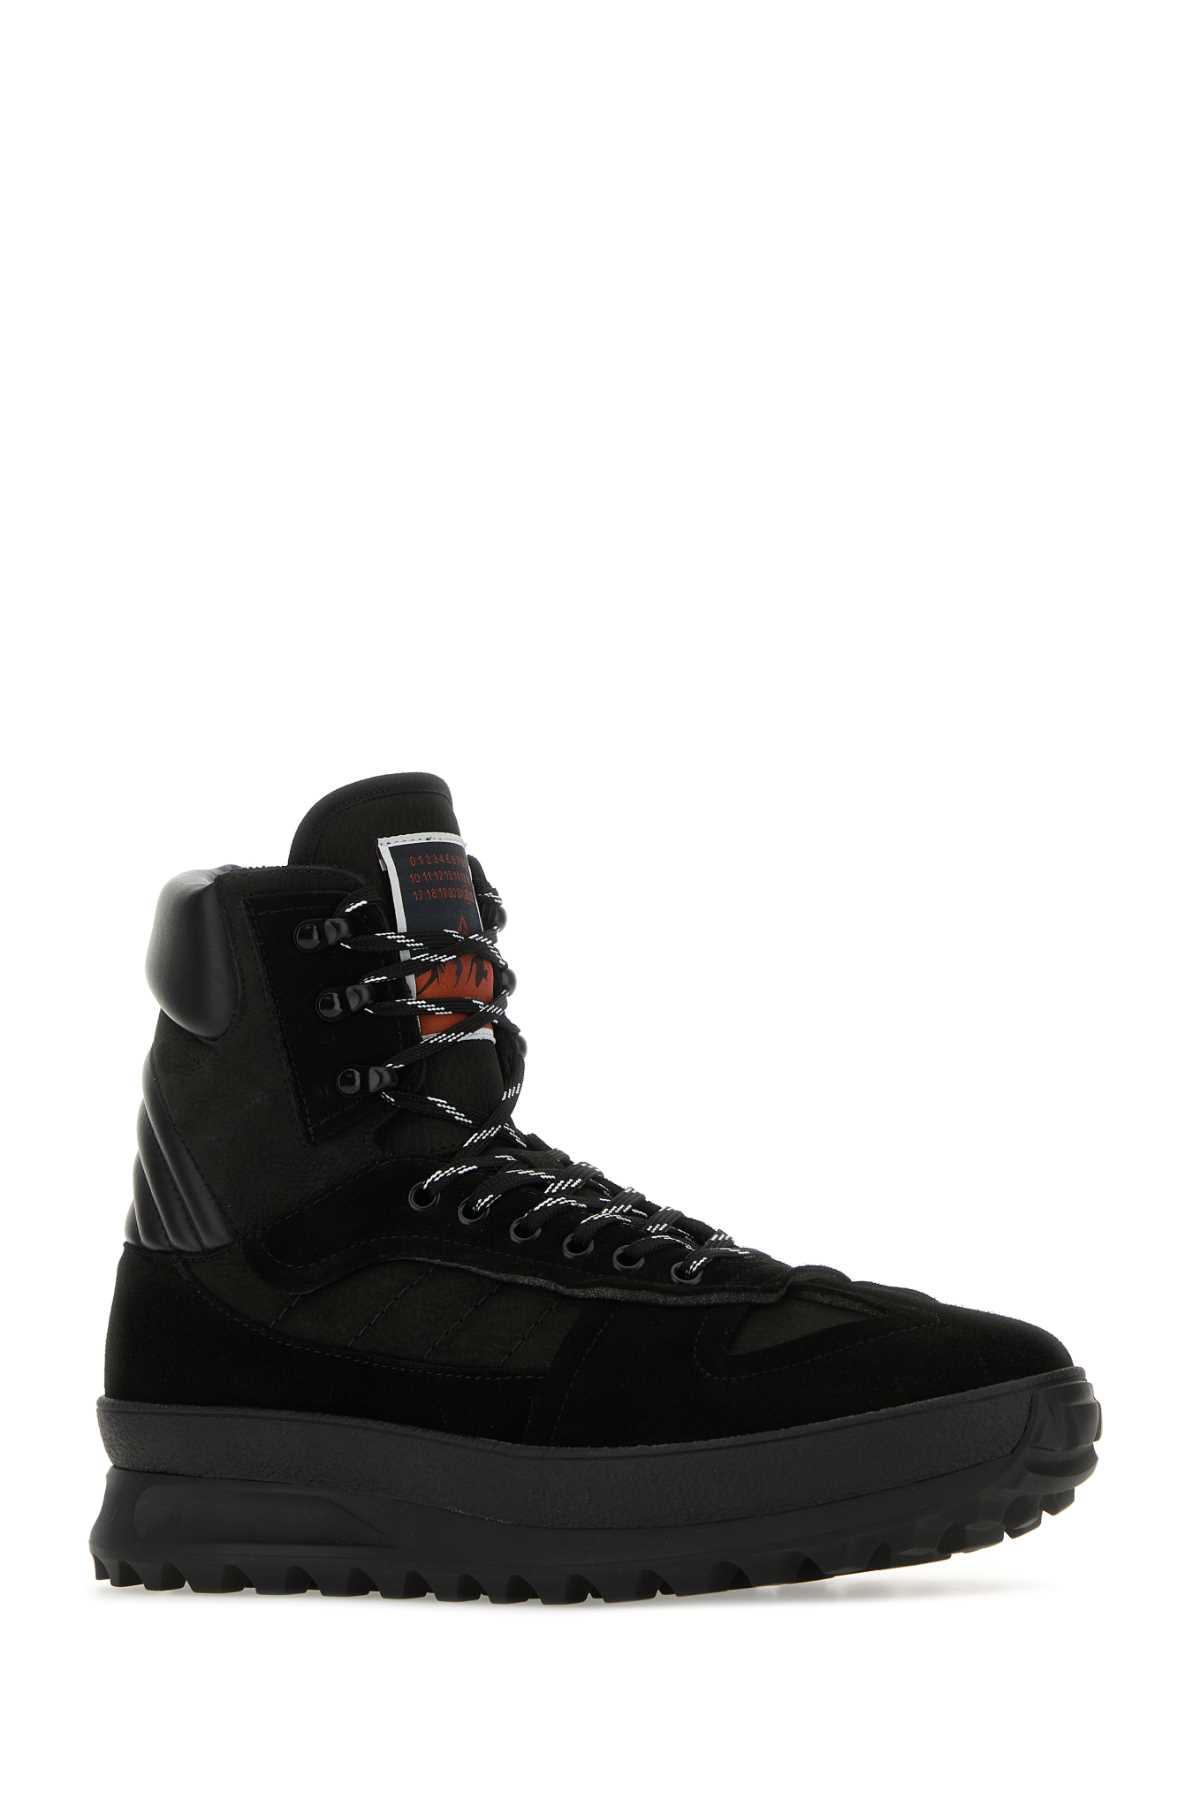 Shop Maison Margiela Black Leather Climber Sneakers